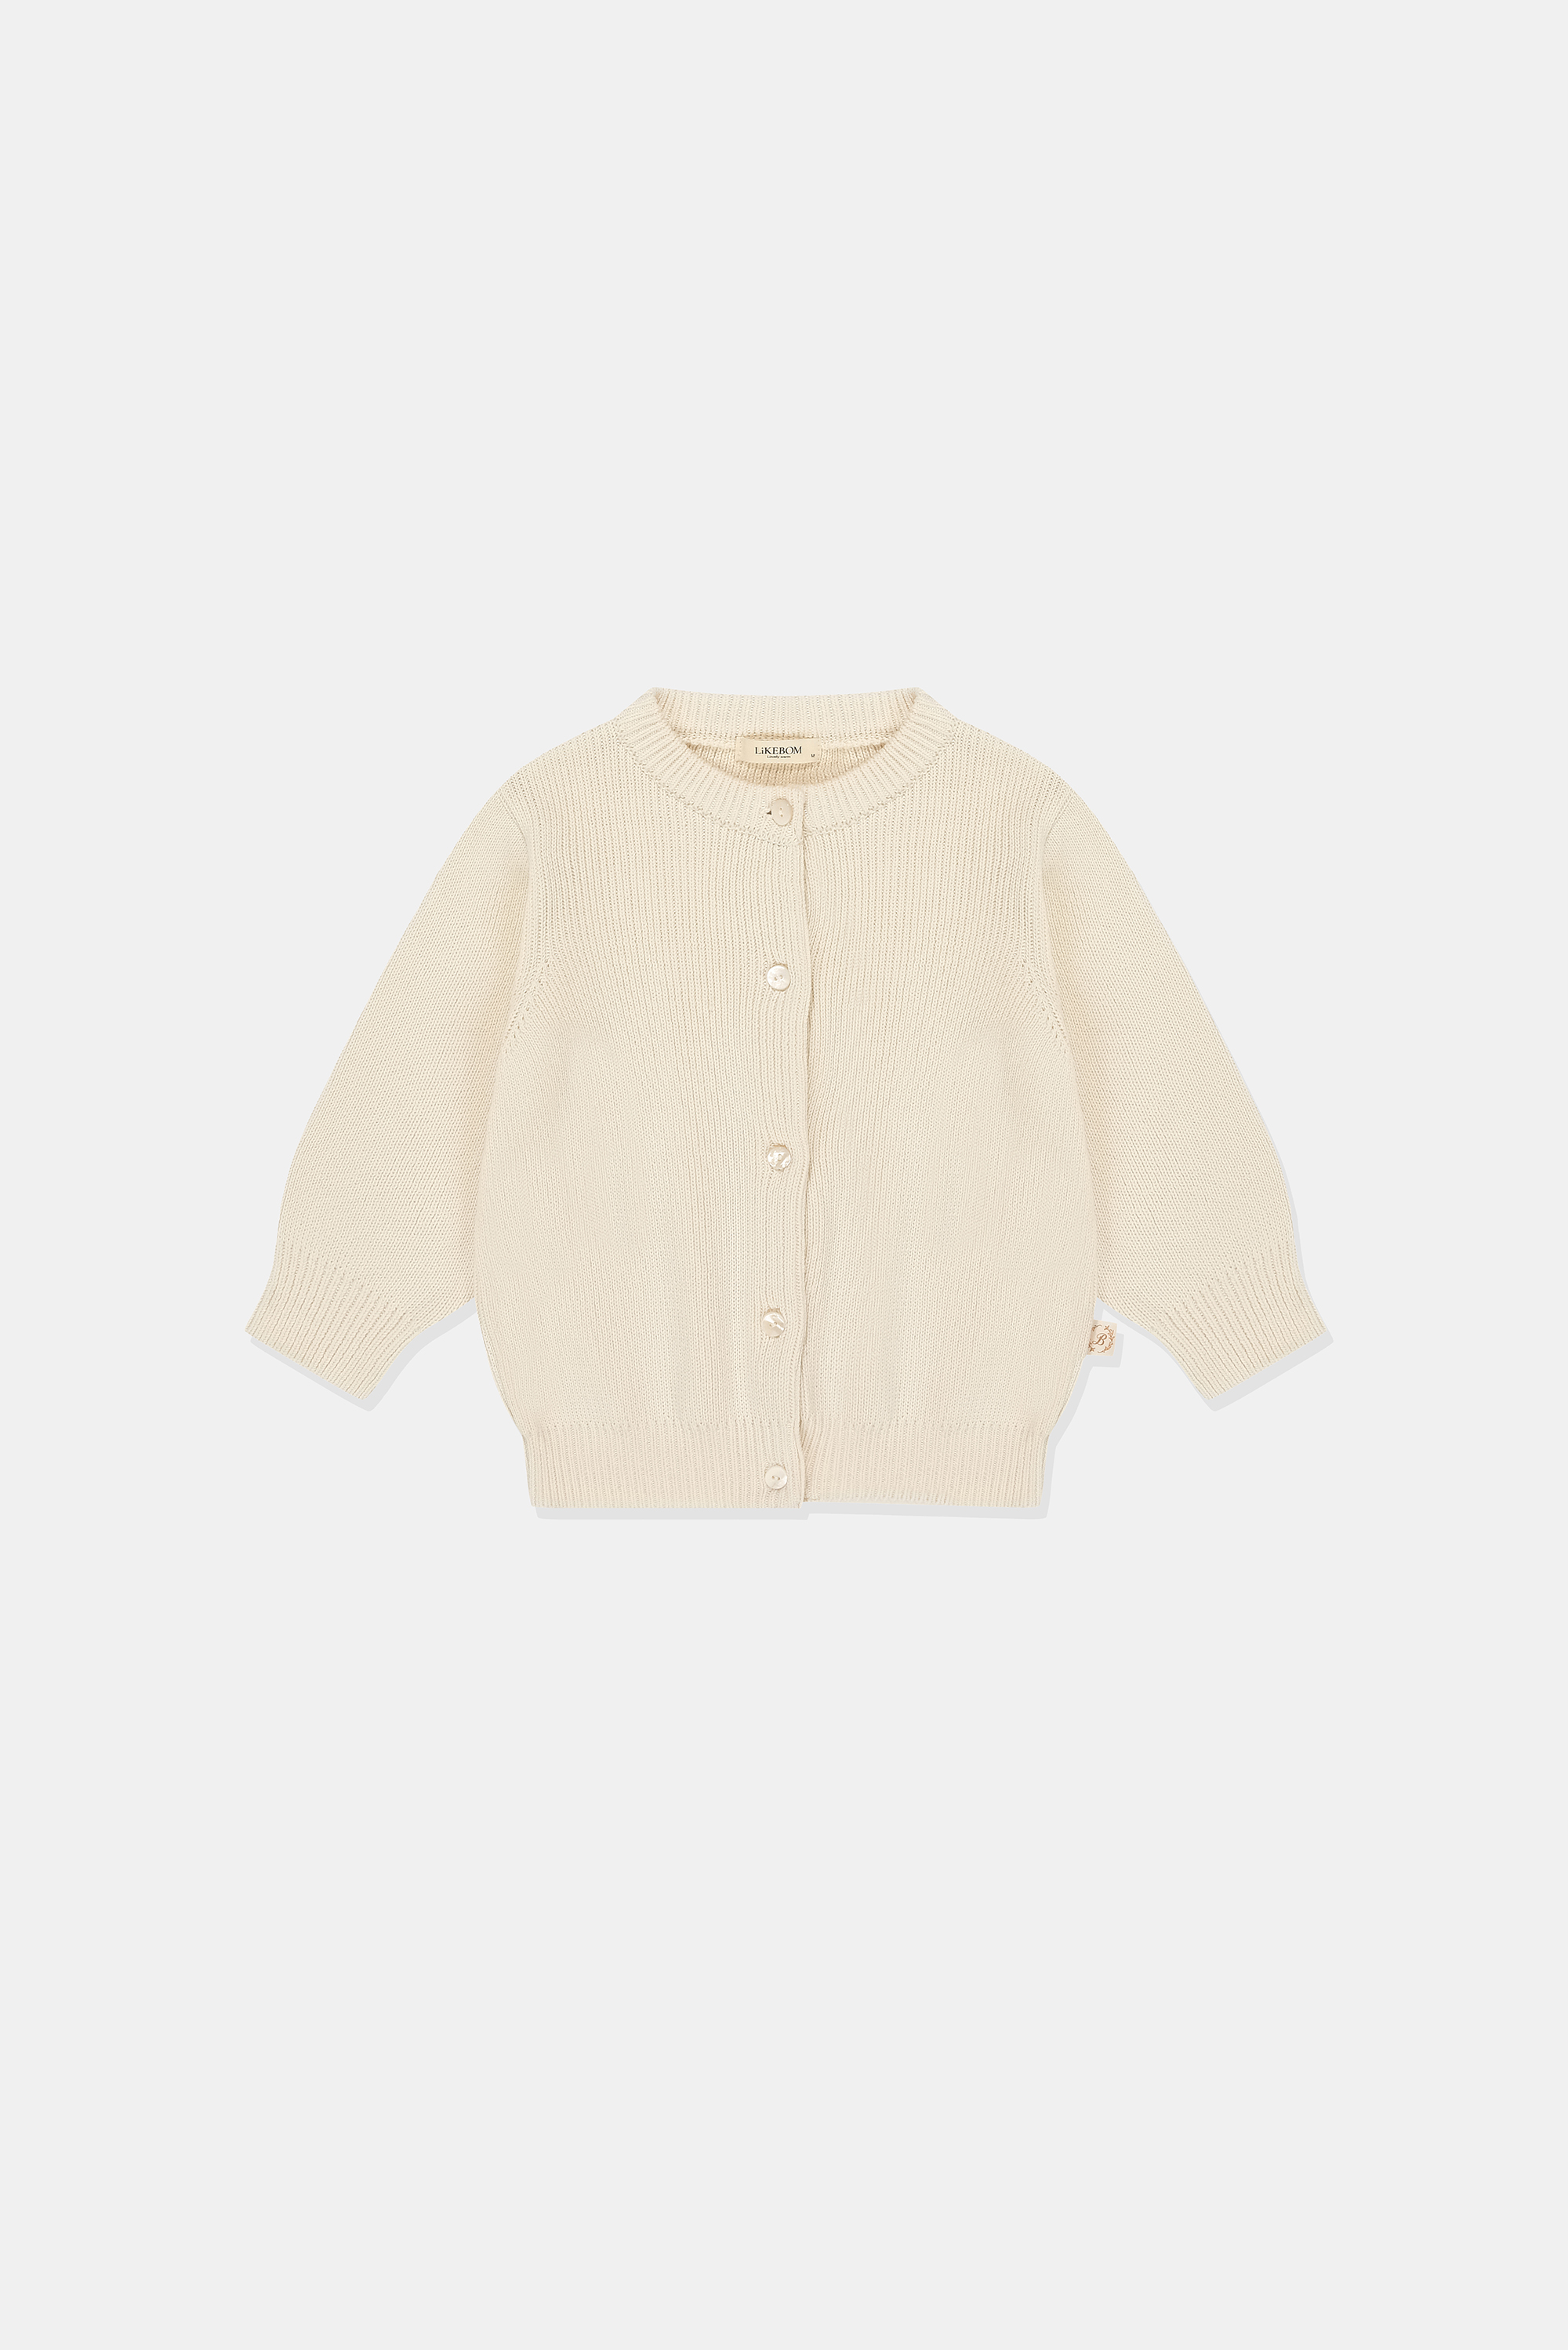 Toddler) Cotton Knit Cardigan, Cream